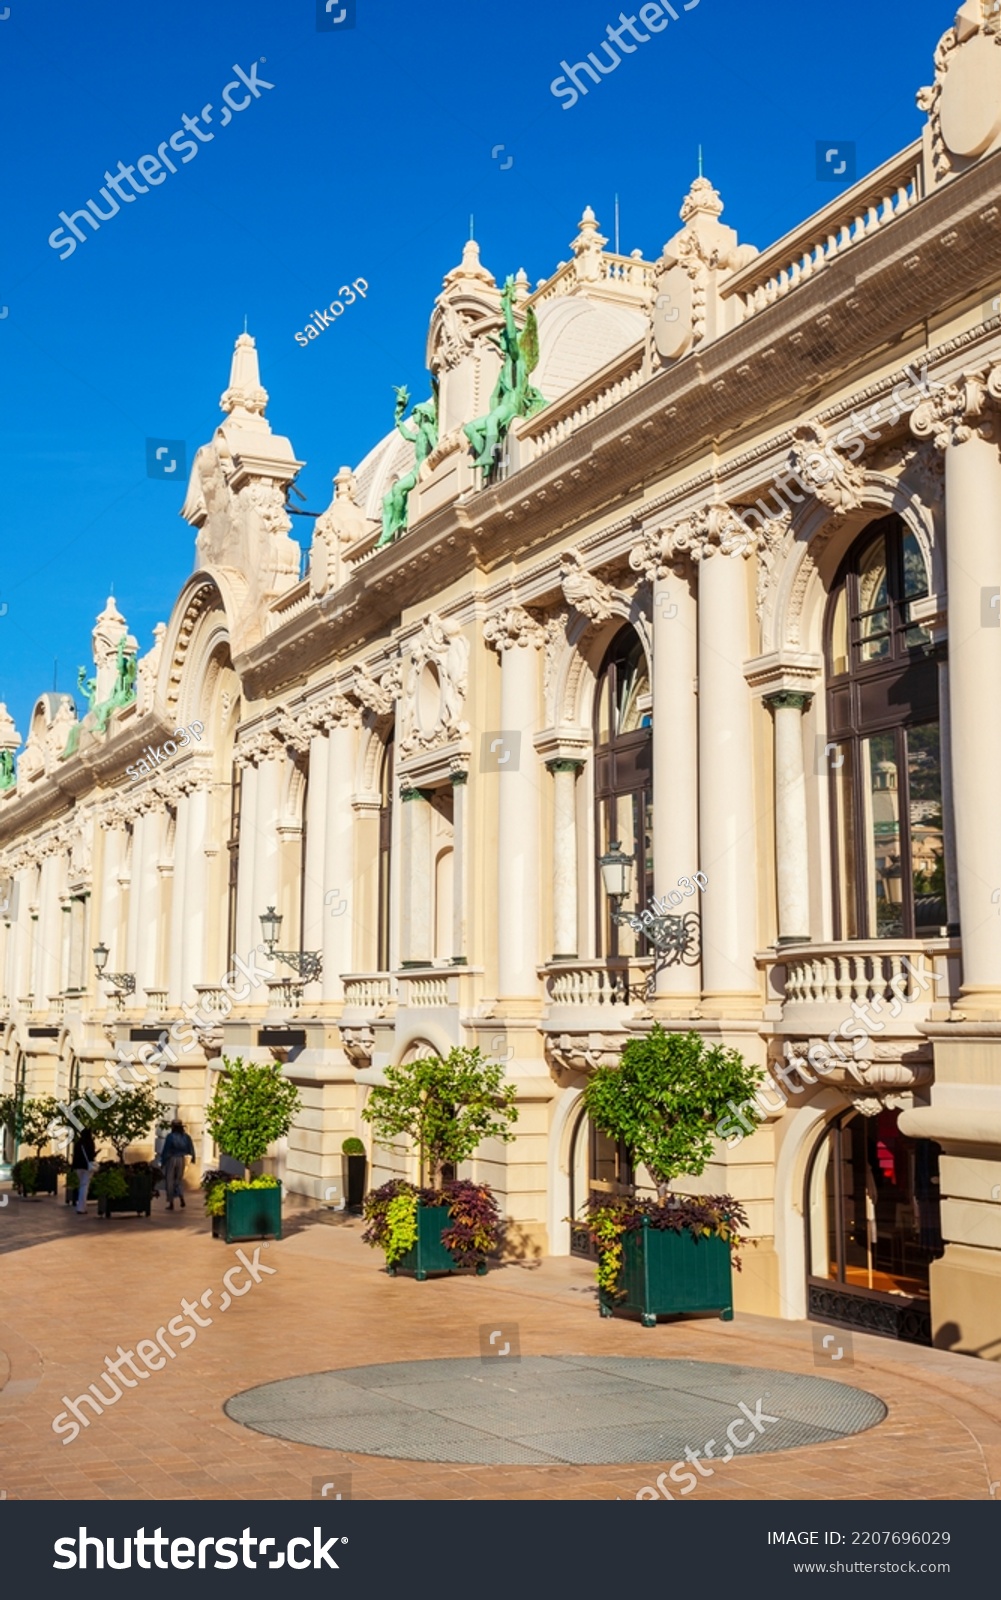 Classic style building at the Place Casino square in Monte Carlo in Monaco #2207696029